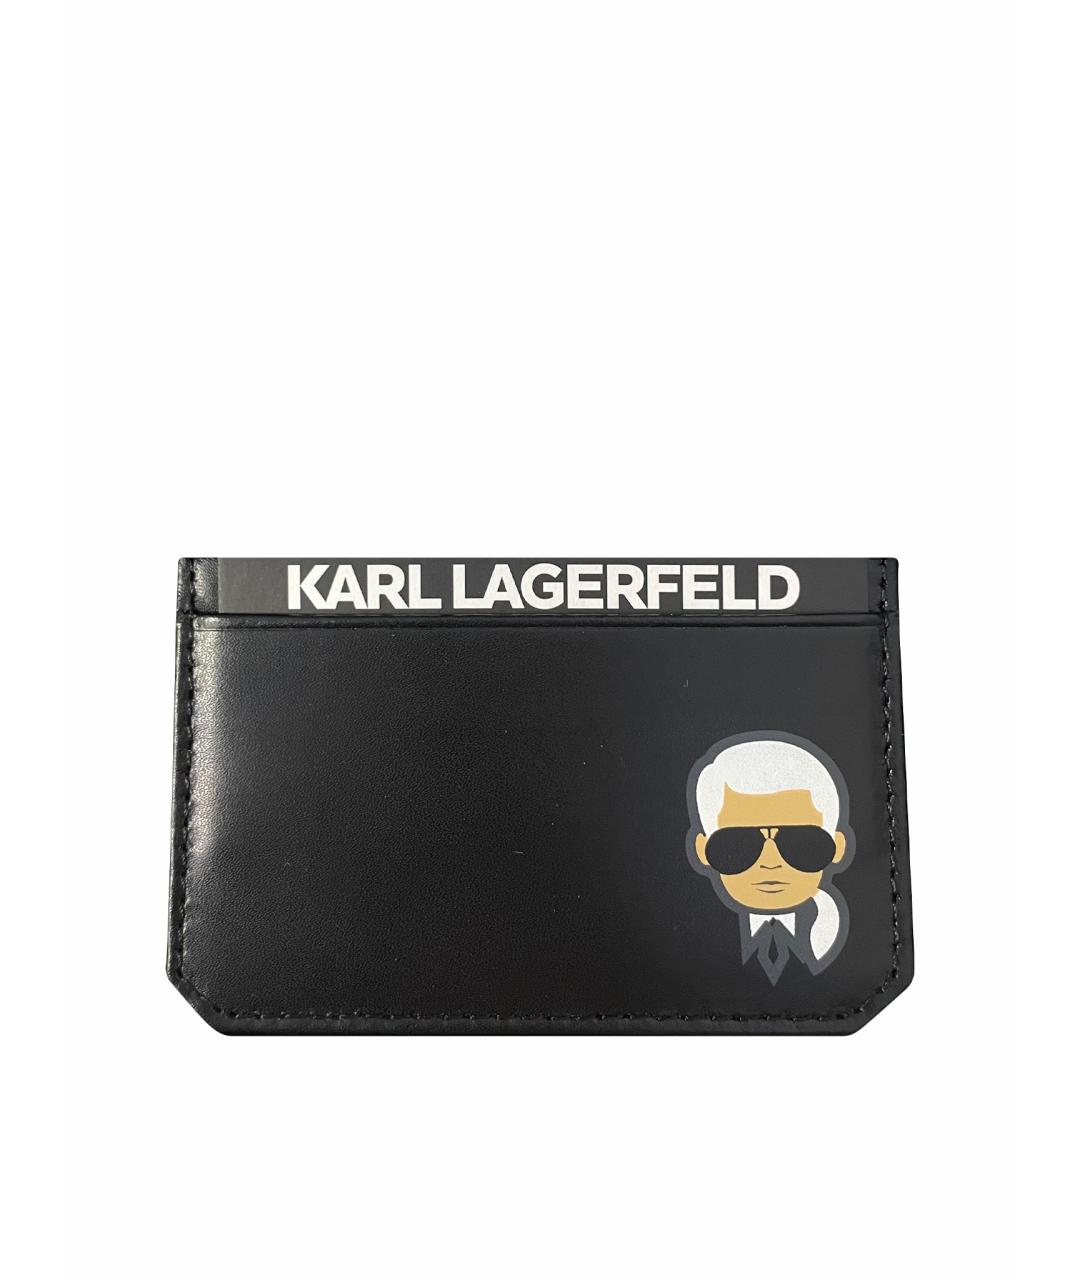 KARL LAGERFELD Черный кожаный кардхолдер, фото 1